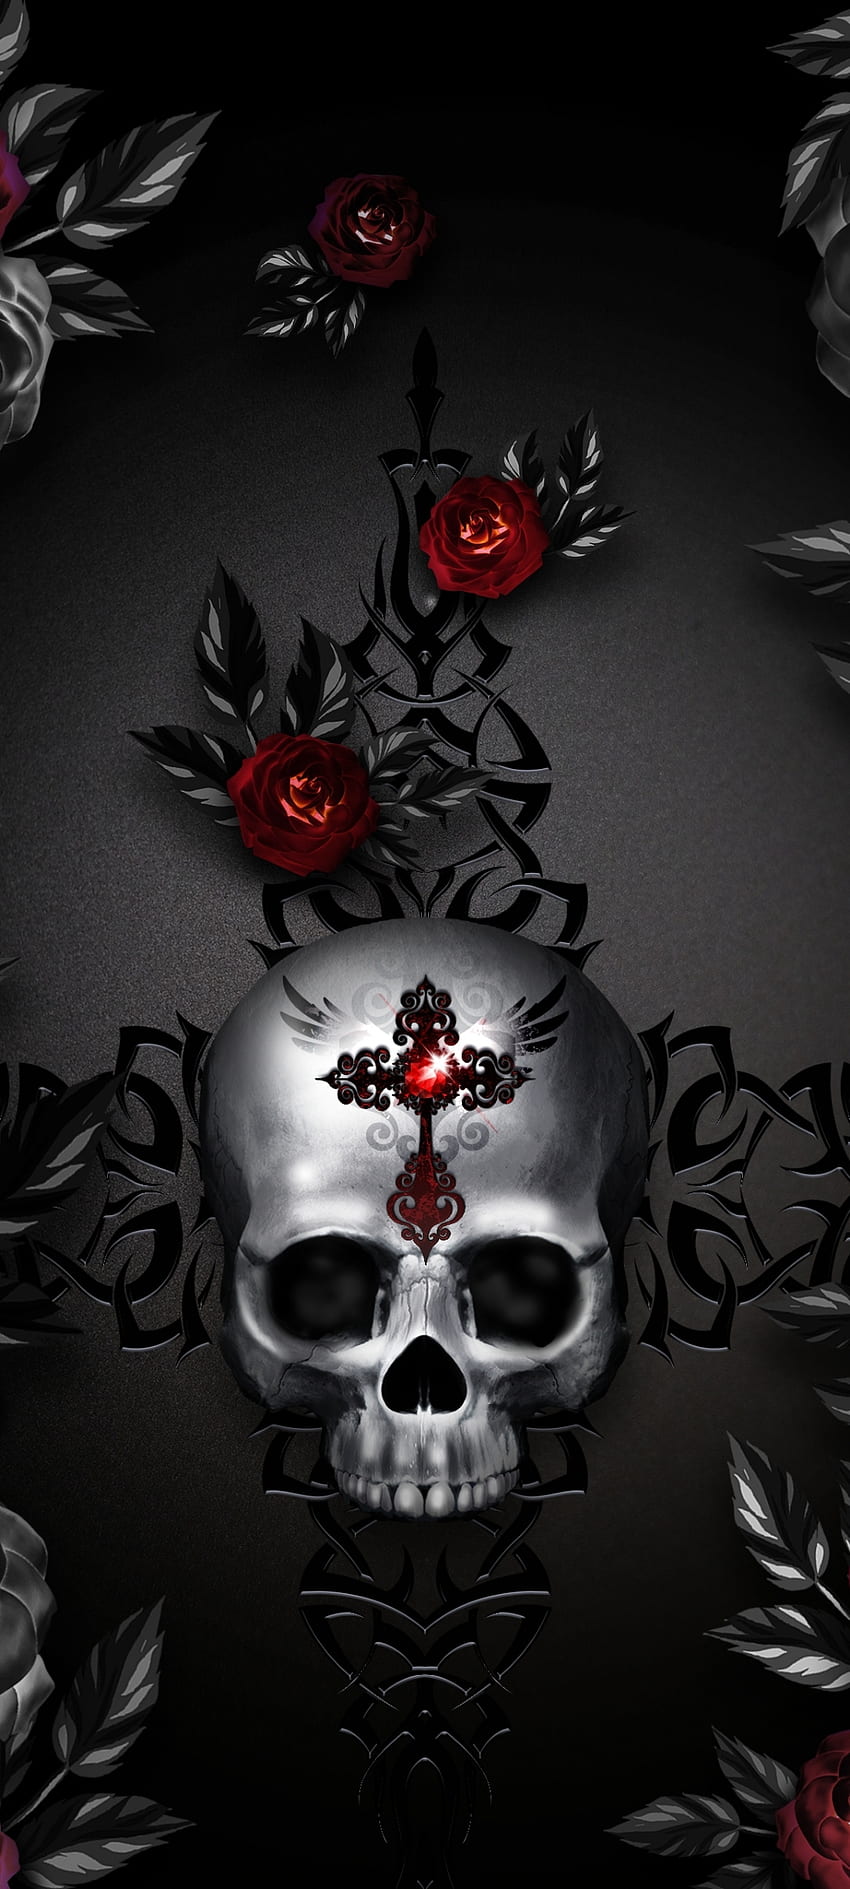 HD wallpaper billelis dark religion death skull flowers red   Wallpaper Flare